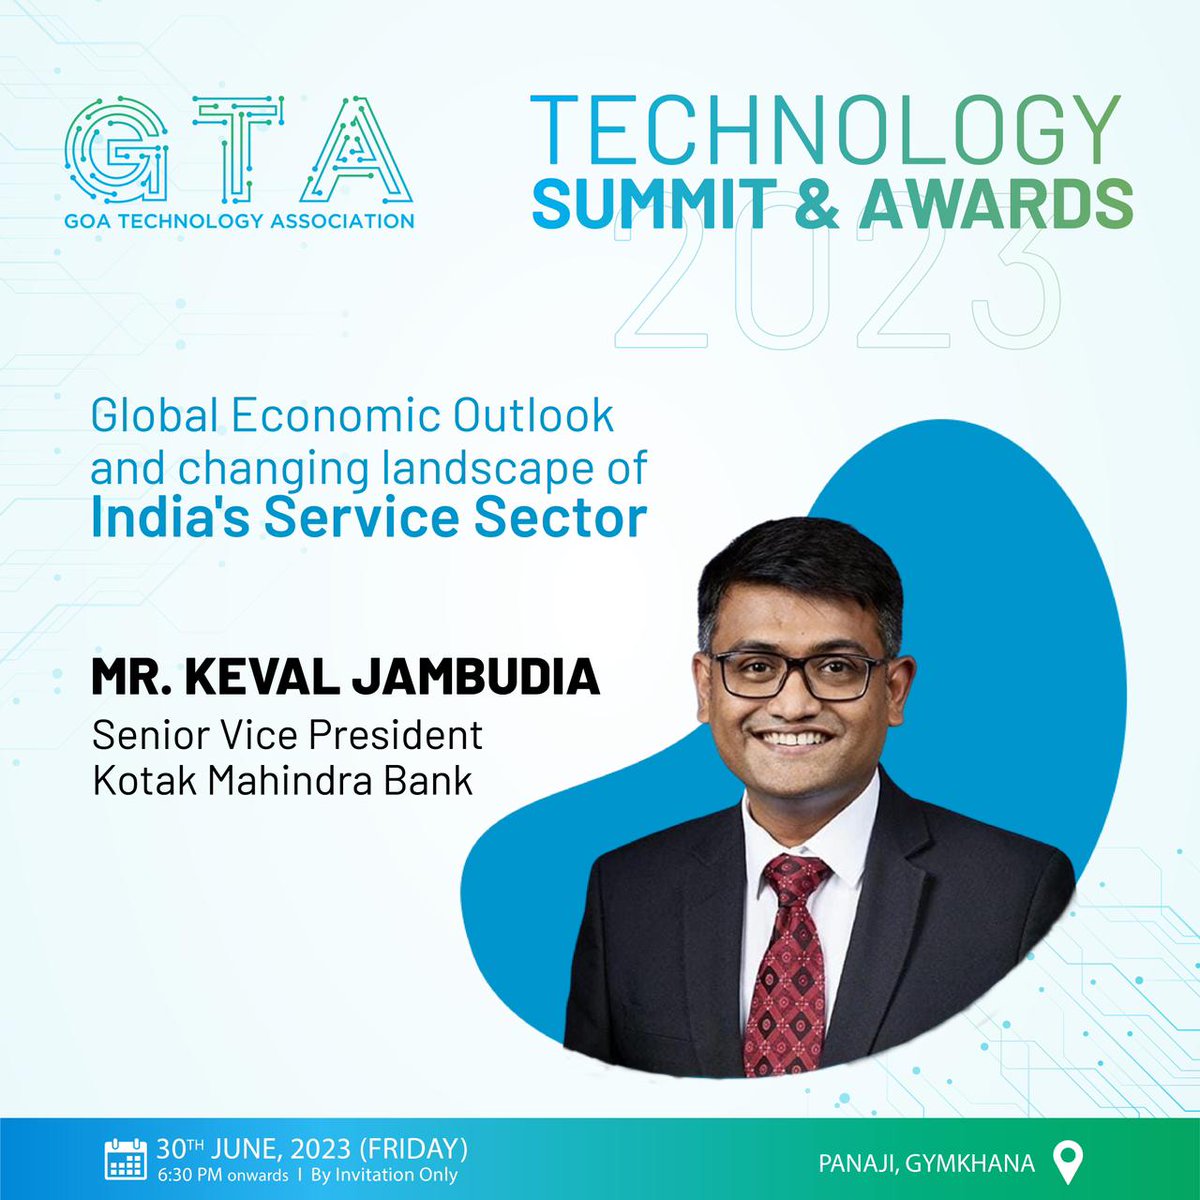 Speaker for the event, Mr. Keval Jambudia, Senior Vice President Kotak Mahindra Bank Ltd. @KotakBankLtd

#GTA #TechnologyAssociation #Goa #KotakBank #business #innovation #software #informationsecurity #information #technologynews #newtechnology #itsupport #technologyrocks